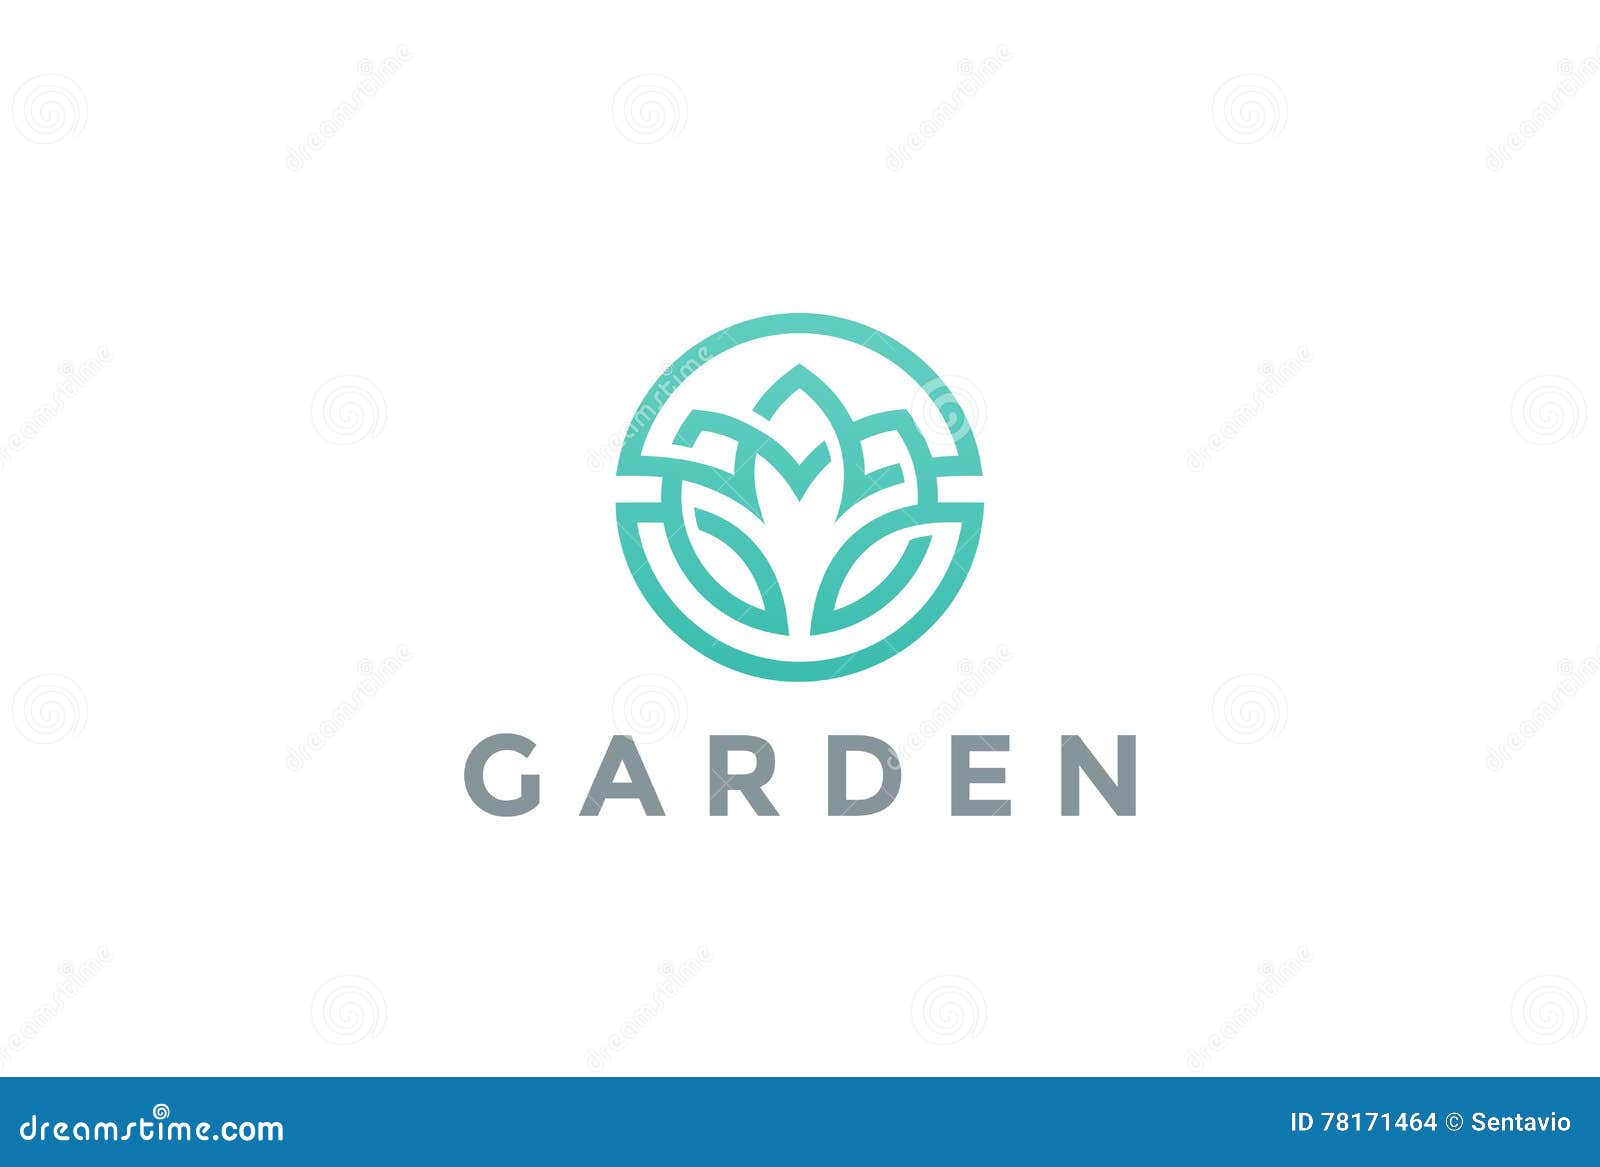 Elegant Logo Design Vector Art PNG, Abstract Elegant Flower Logo Icon  Vector Design, Logotype, Boutique, Feminine PNG Image For Free Download